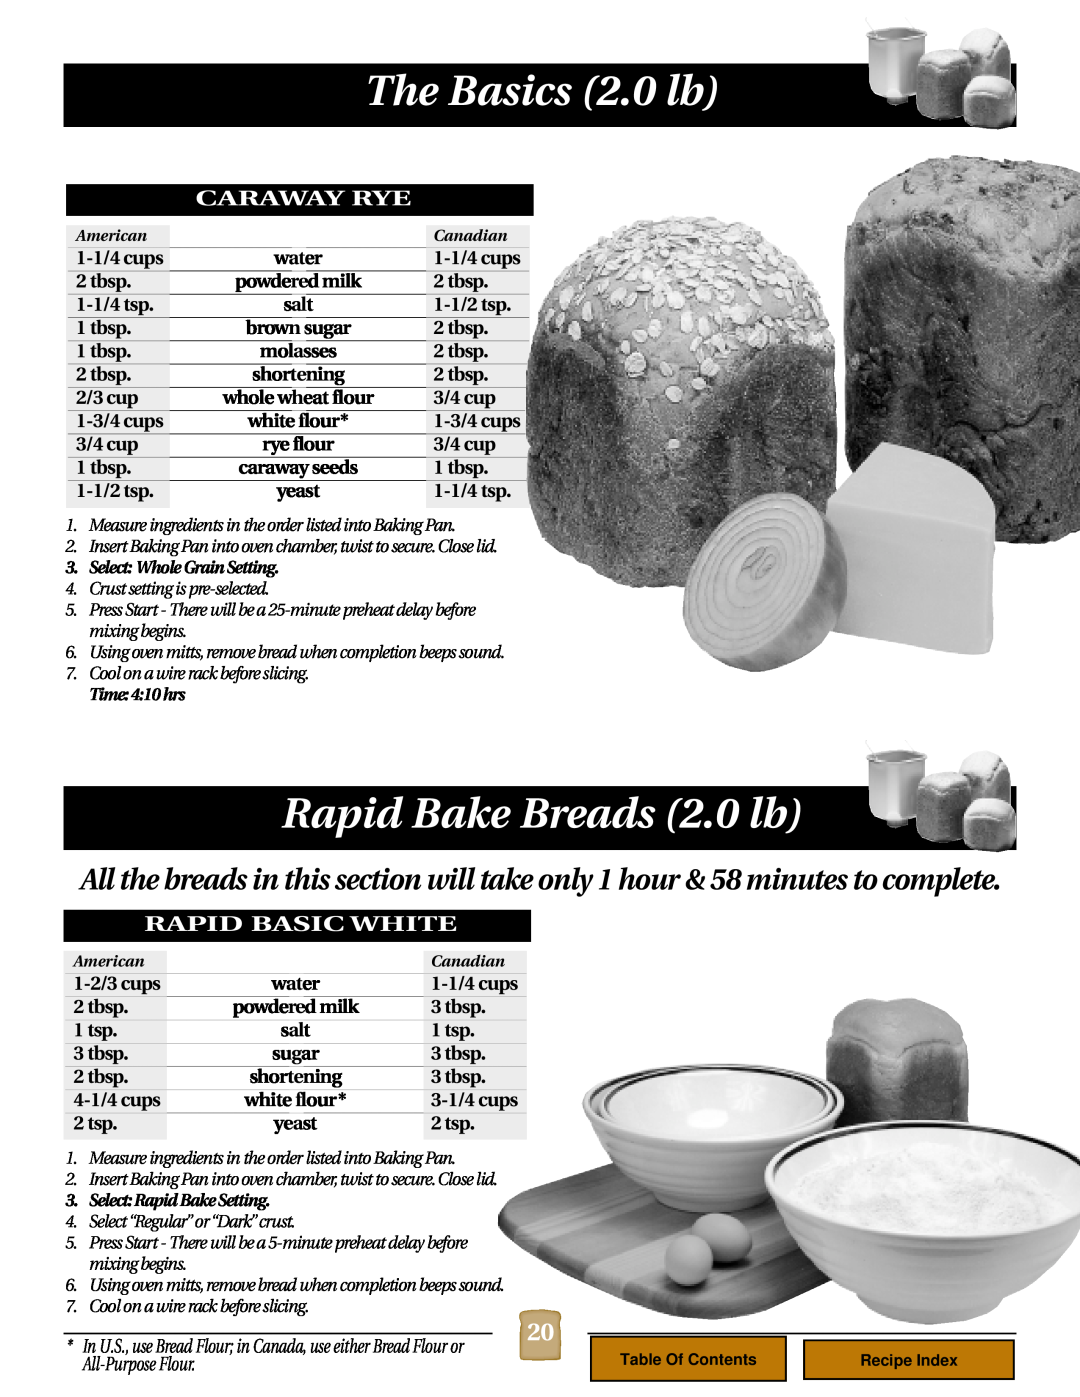 Black & Decker B1620 manual Rapid Bake Breads 2.0 lb, The Basics 2.0 lb, Caraway Rye, Rapid Basic White, All-Purpose Flour 